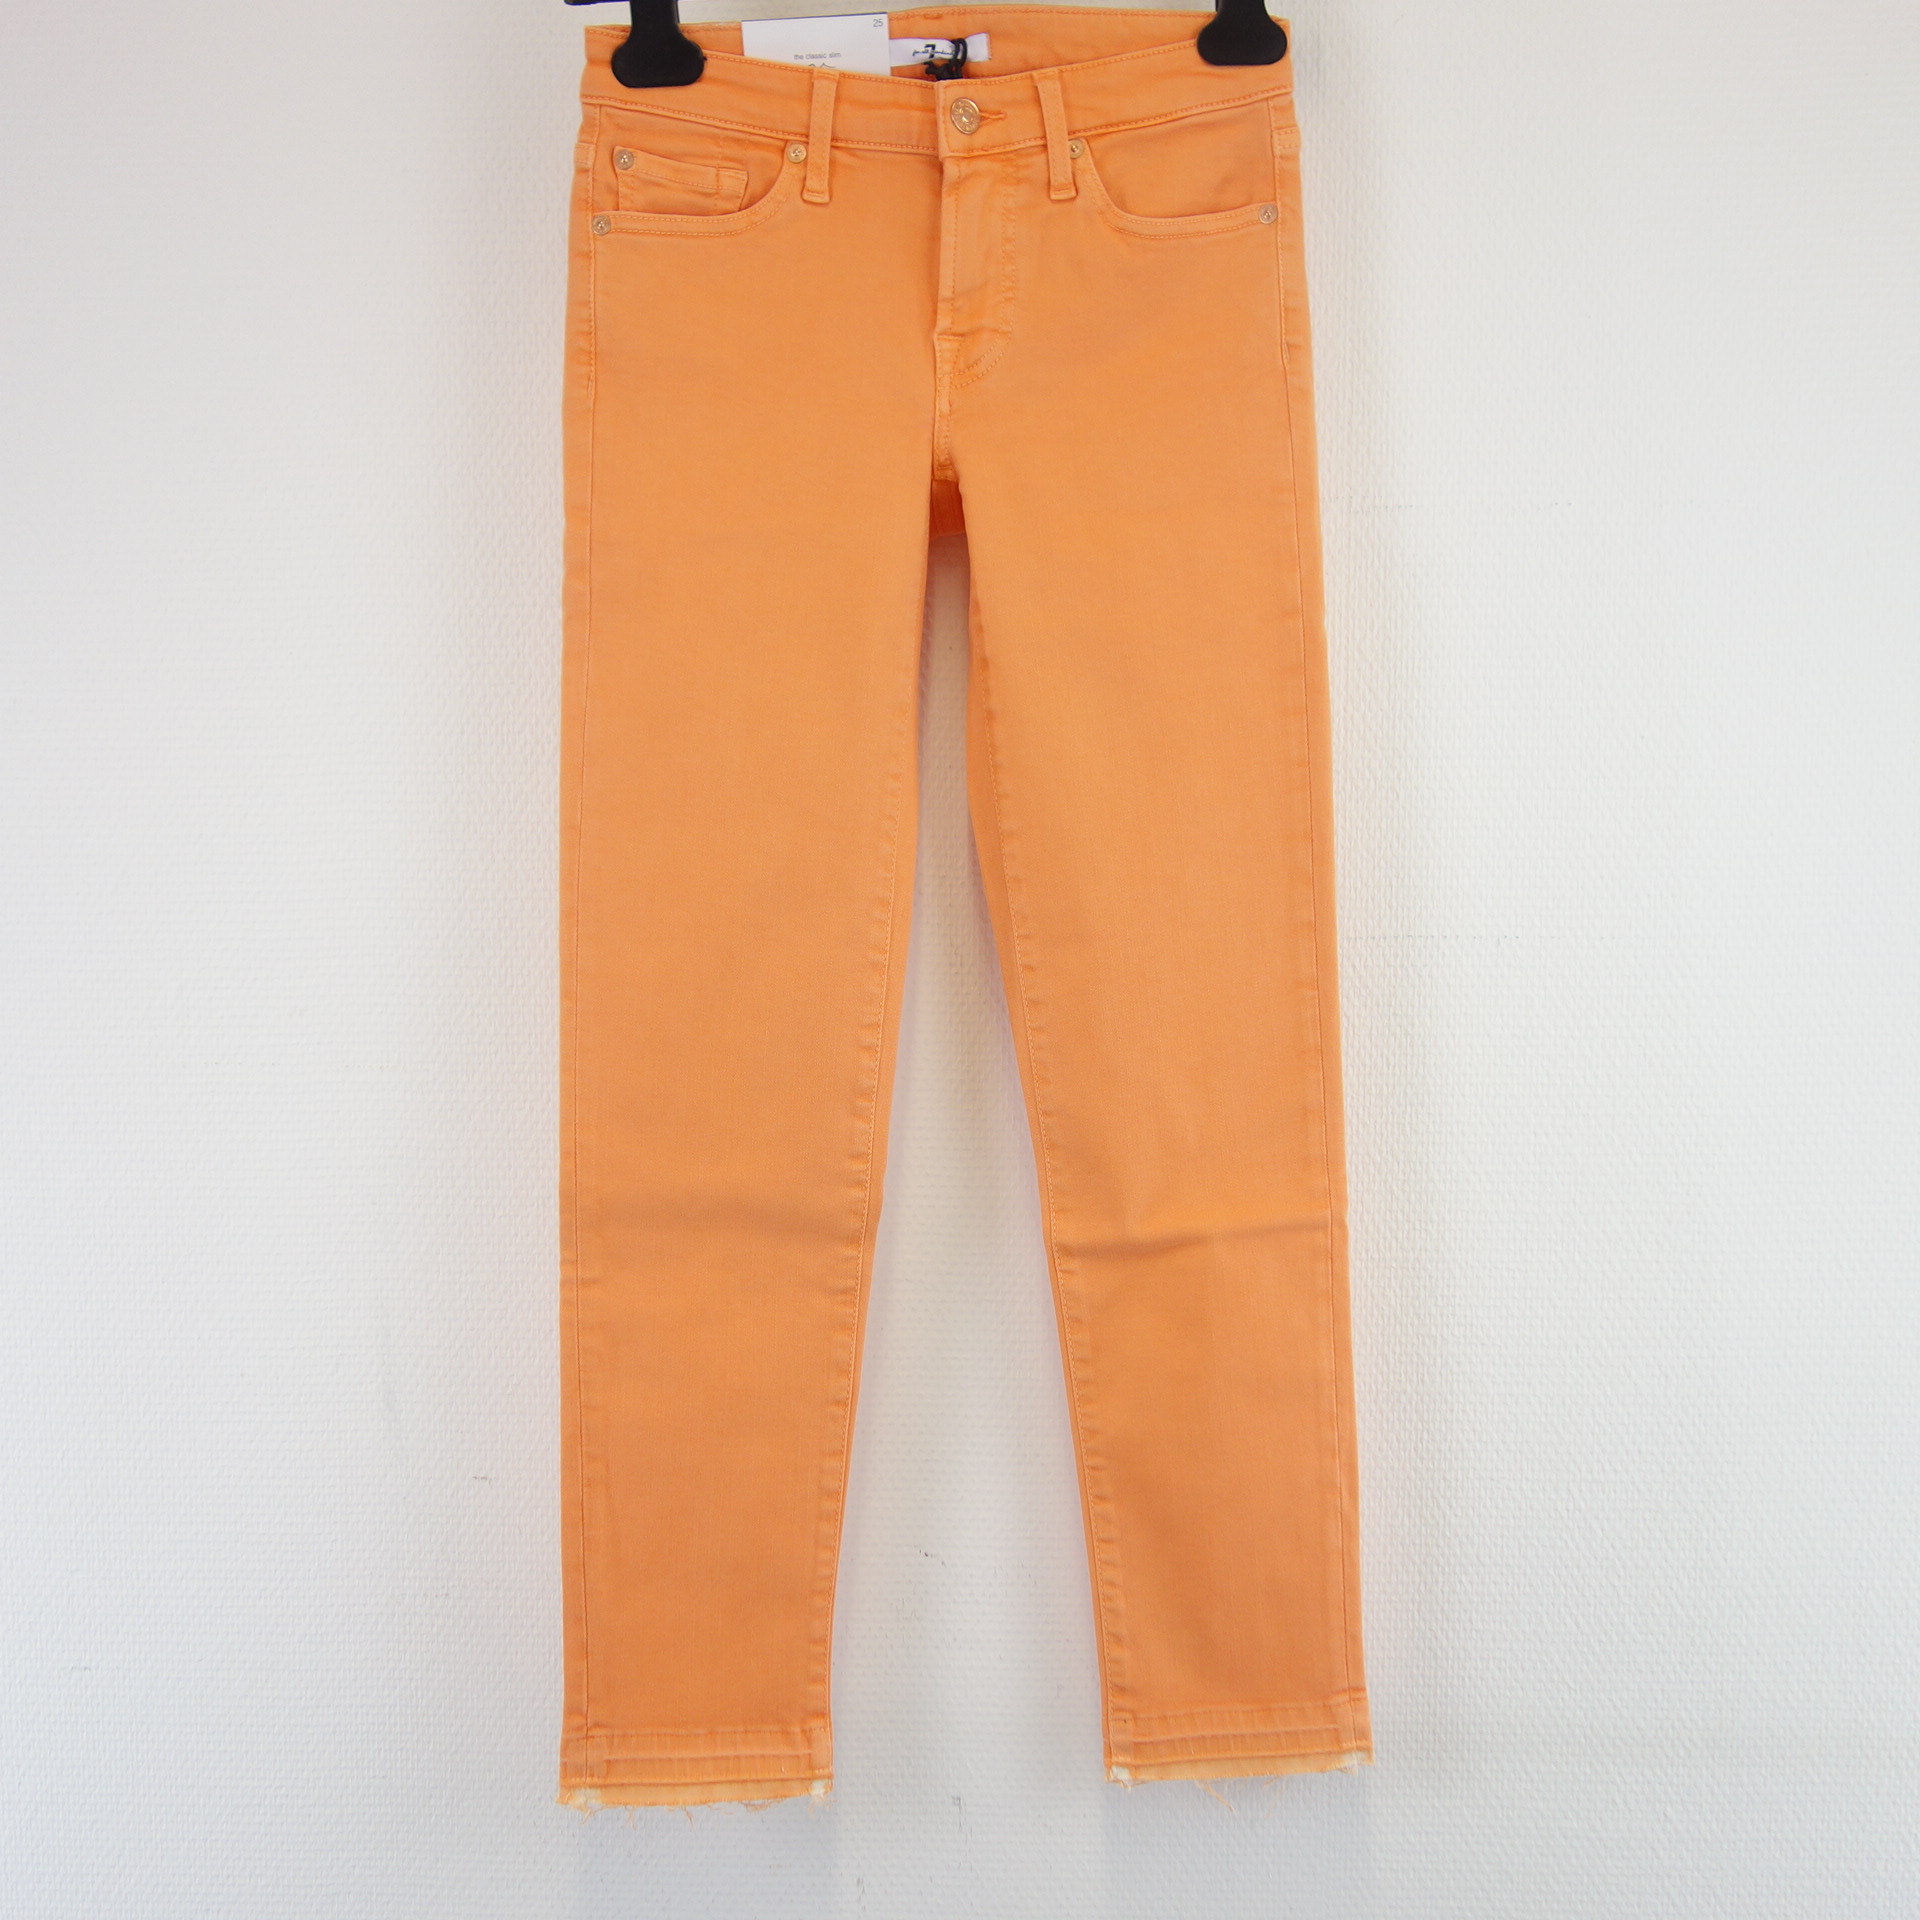 7 FOR ALL MANKIND Damen Jeans Hose Jeanshose Orange 25 Pyper crop Classic Slim Illusion